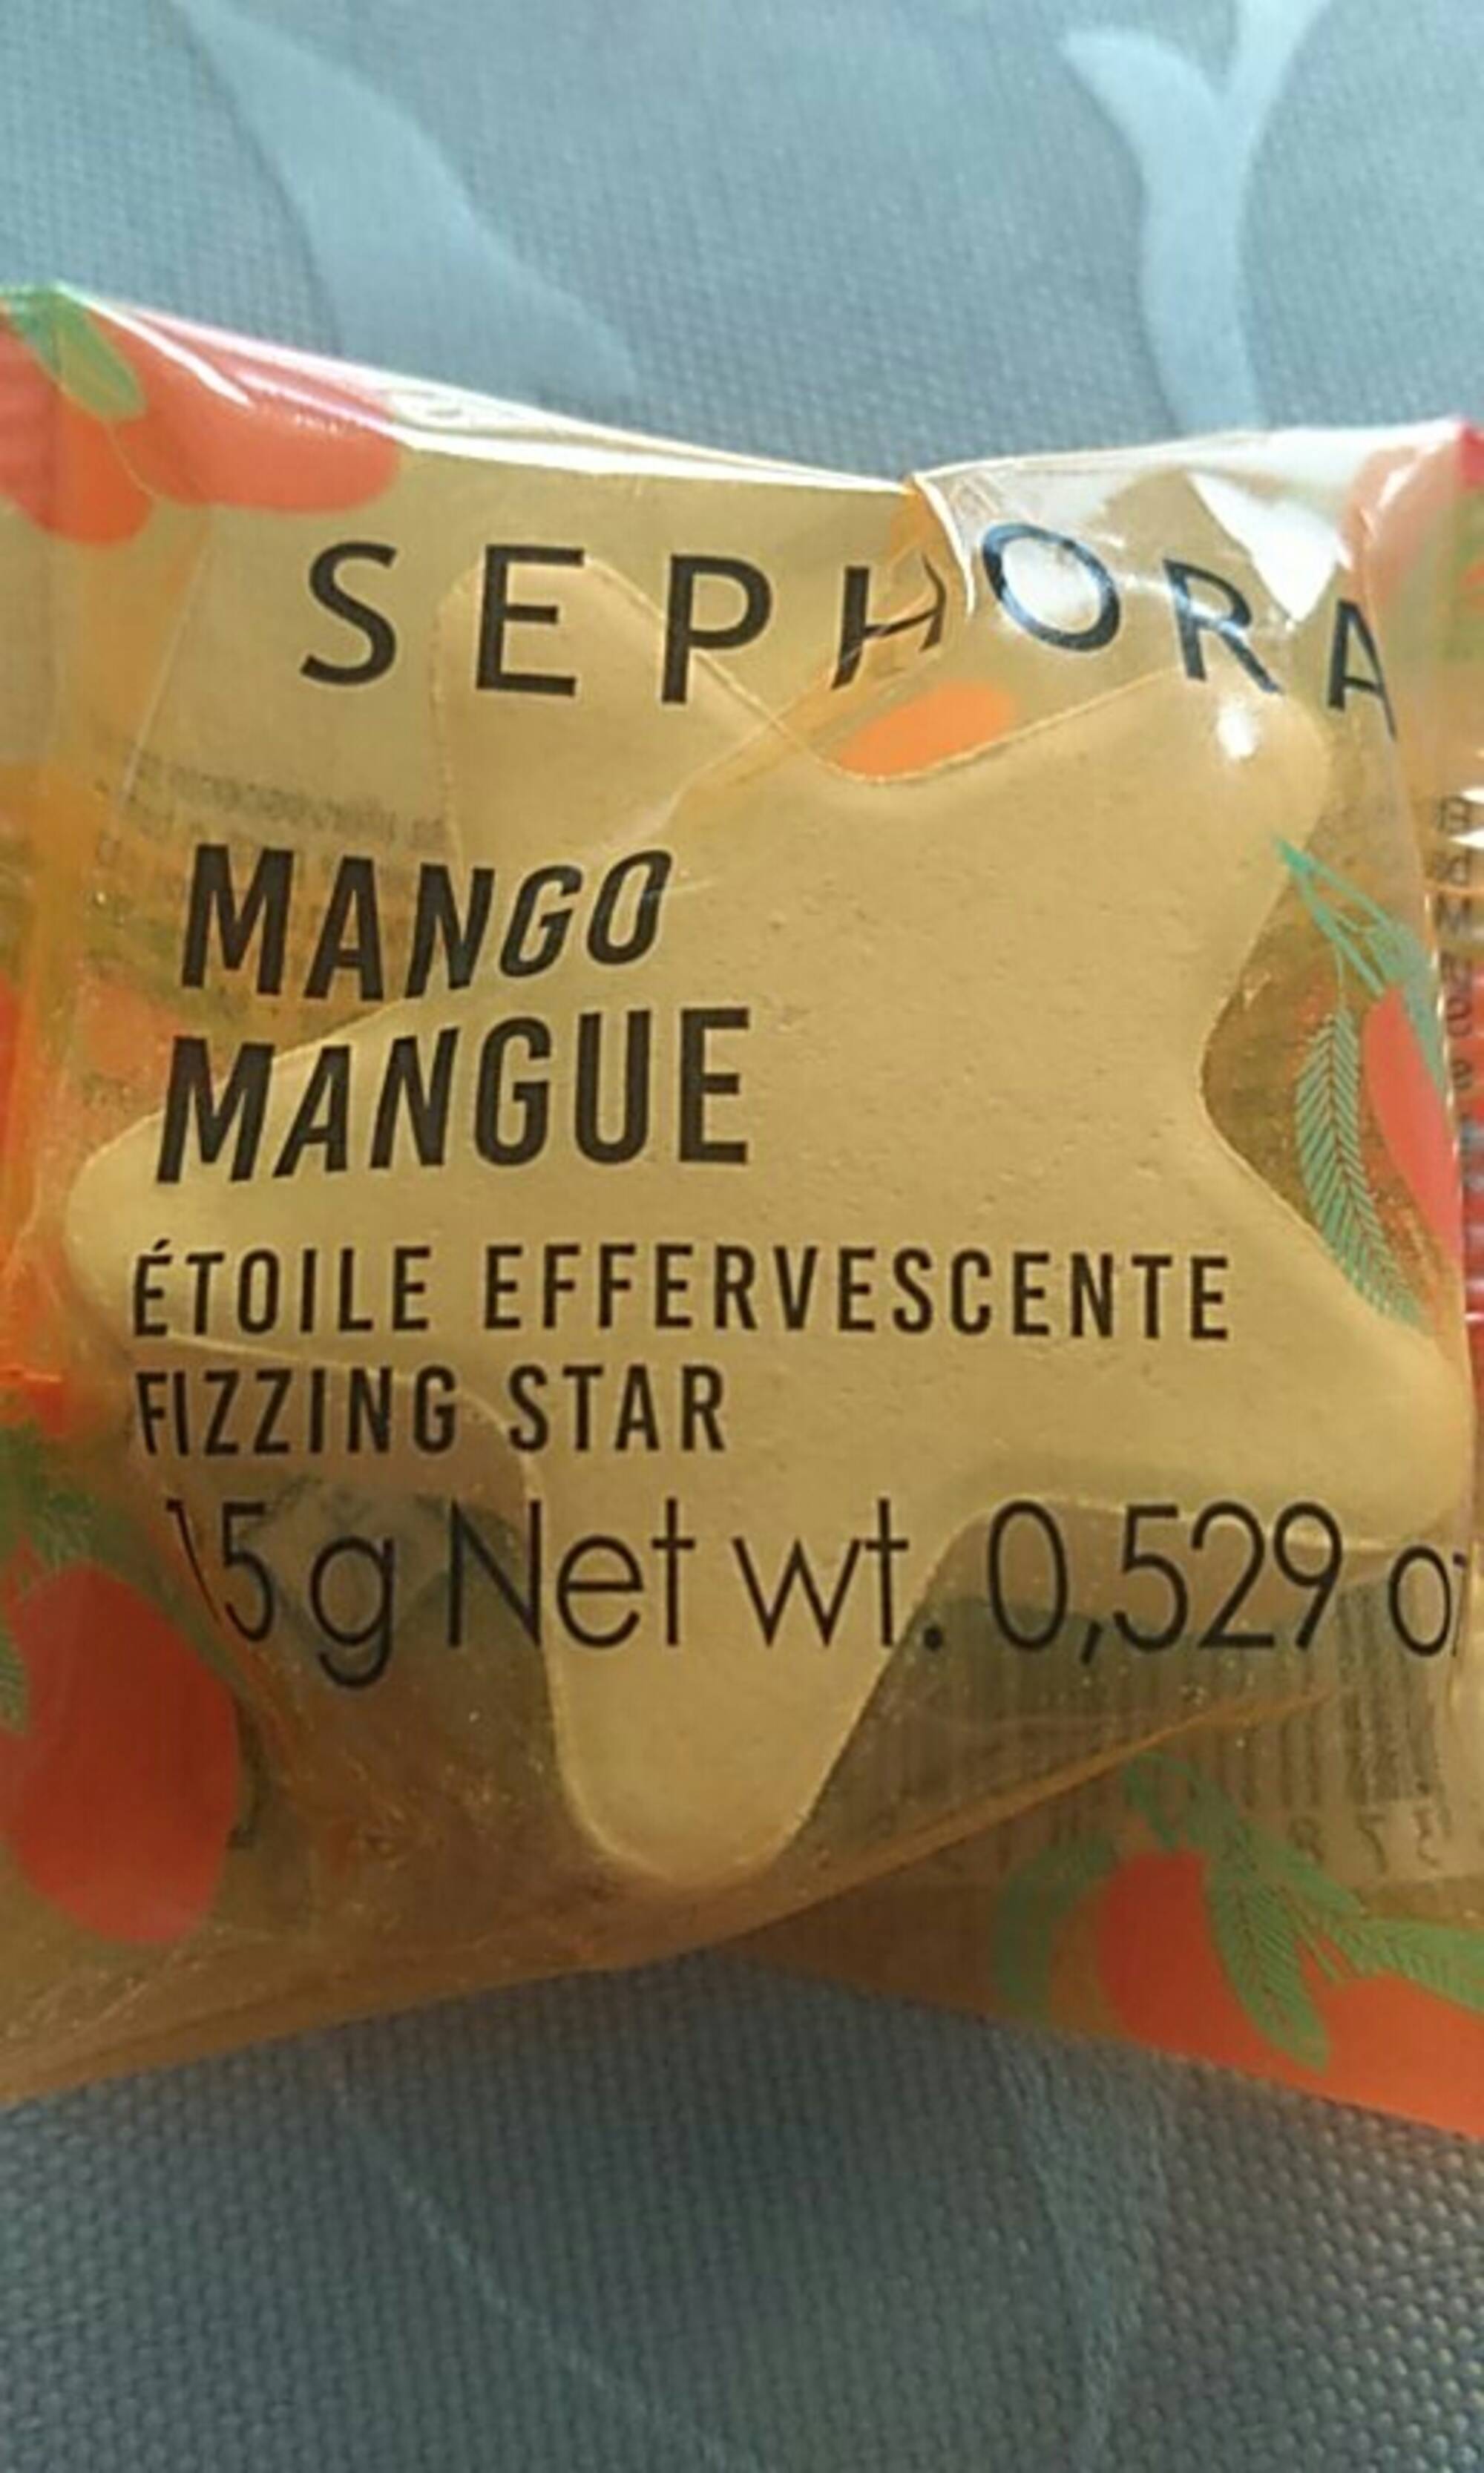 SEPHORA - Étoile effervescente mangue